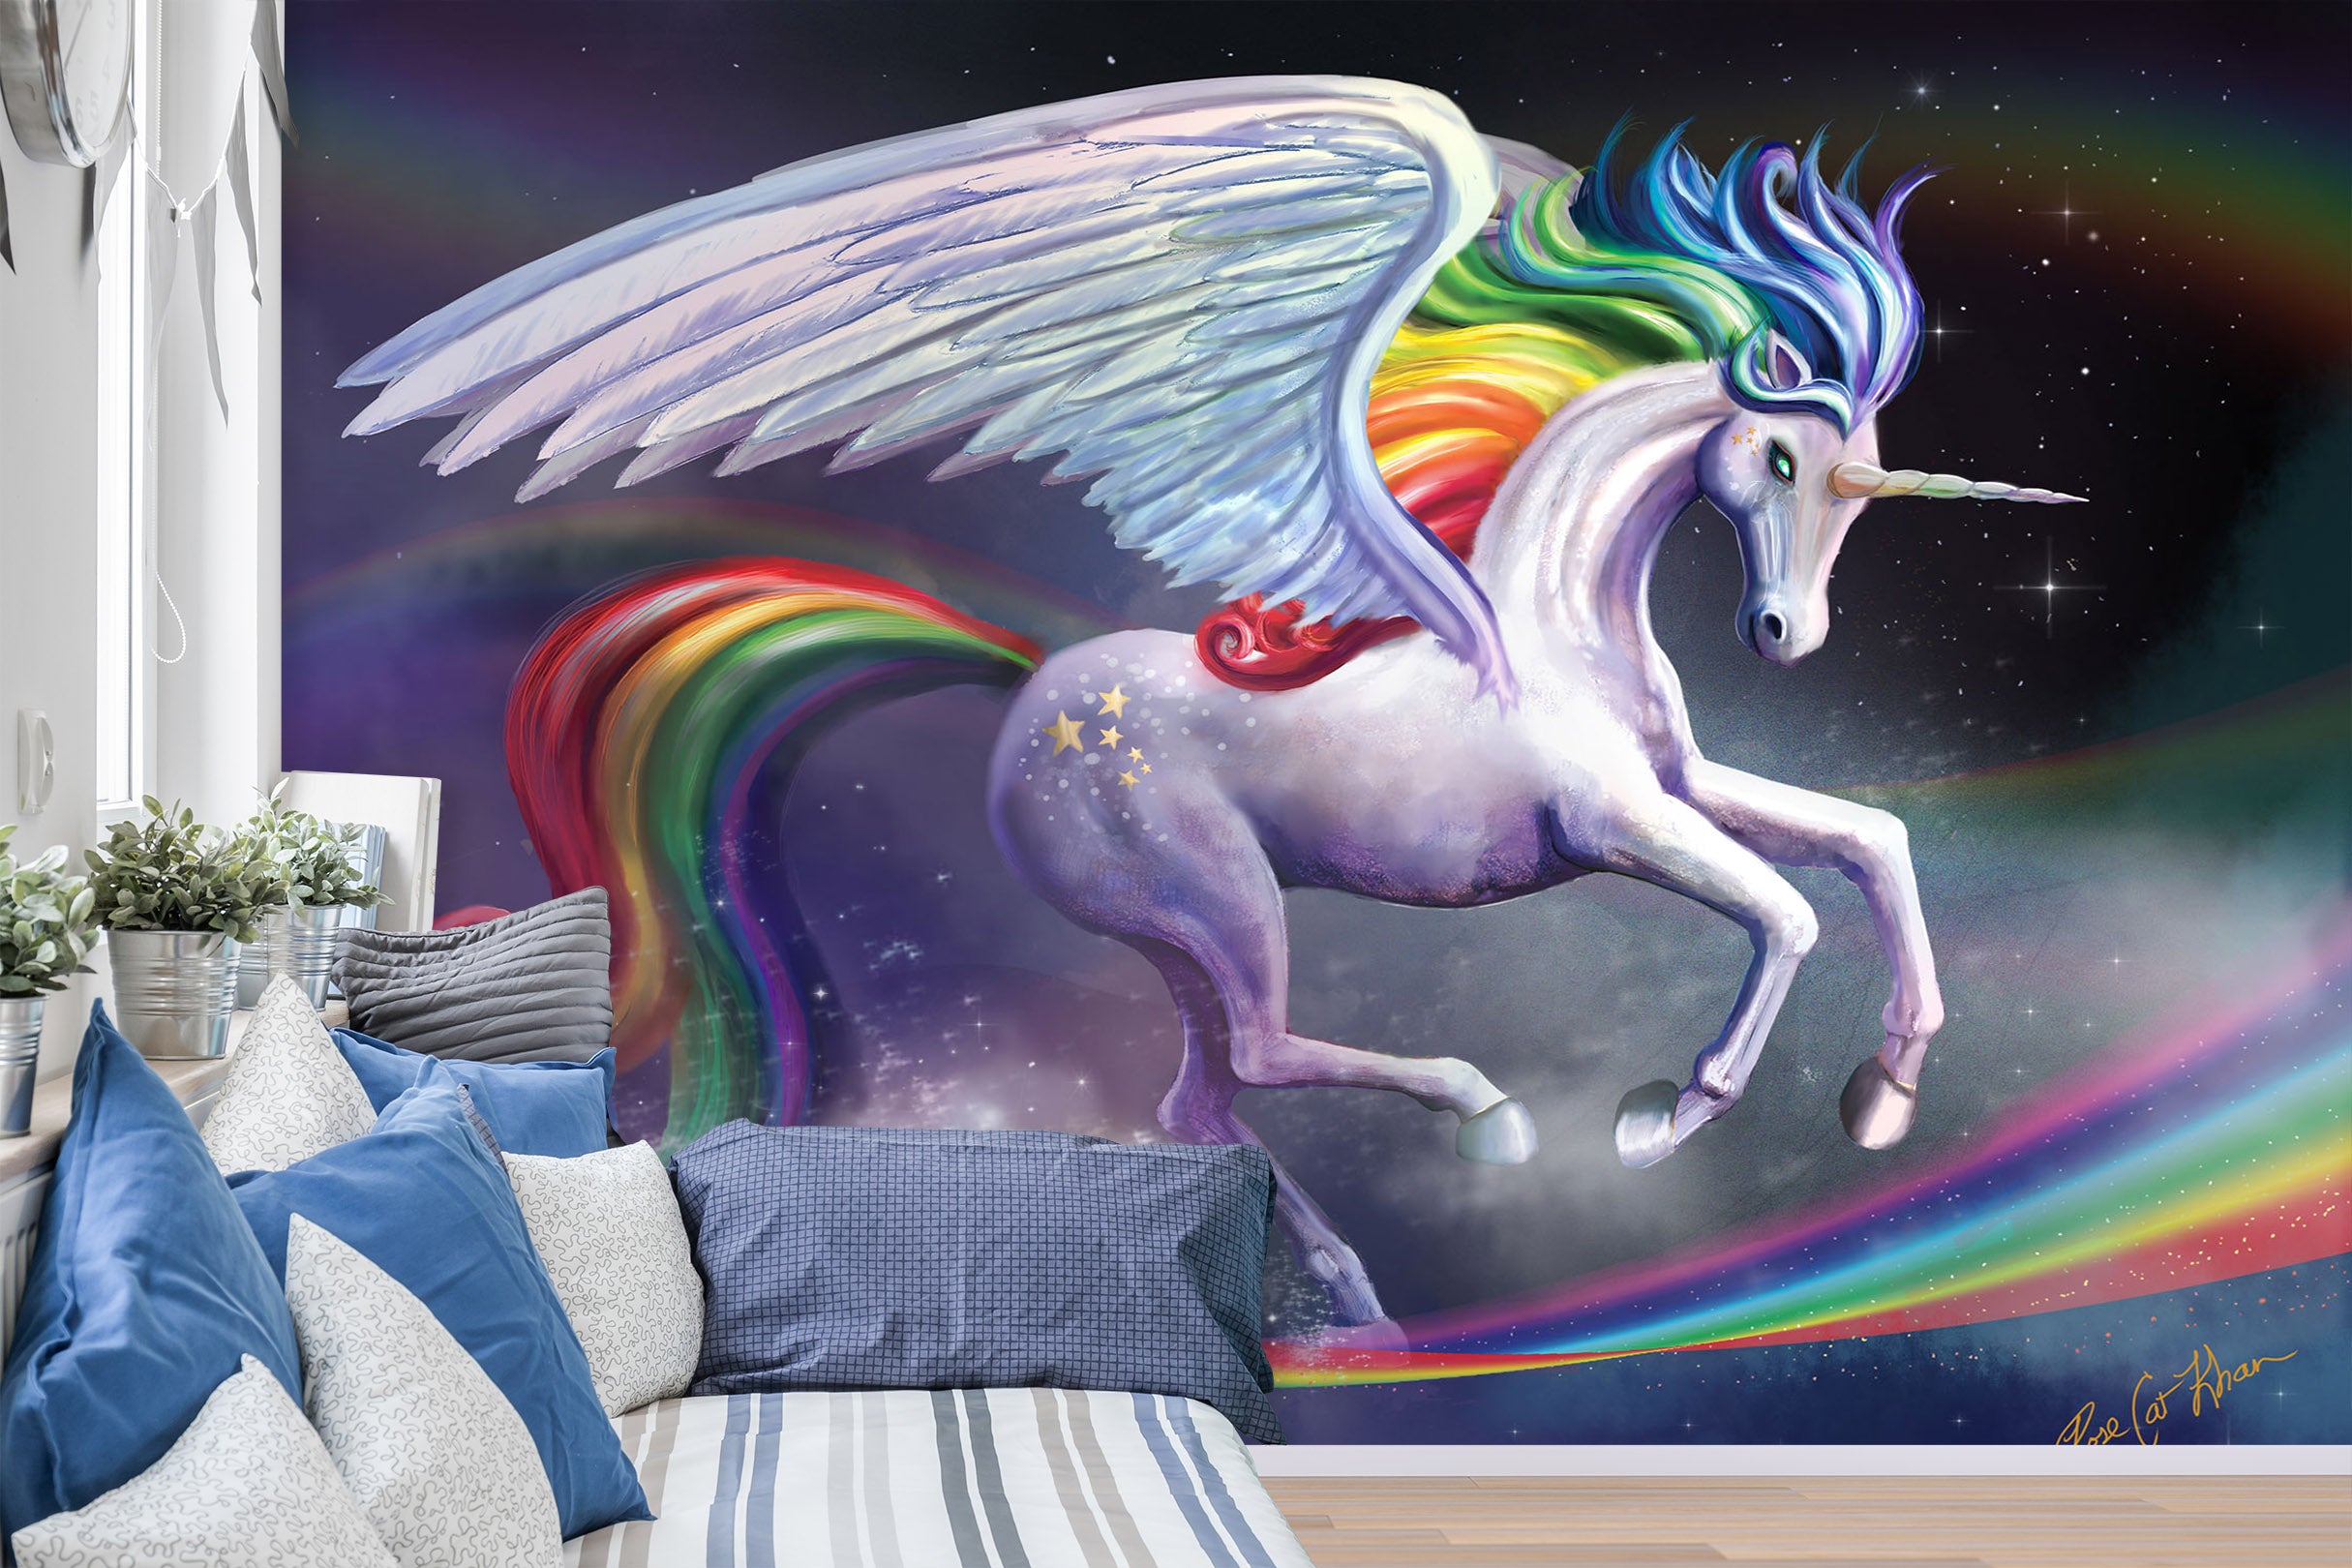 3D Winged Unicorn 1412 Rose Catherine Khan Wall Mural Wall Murals